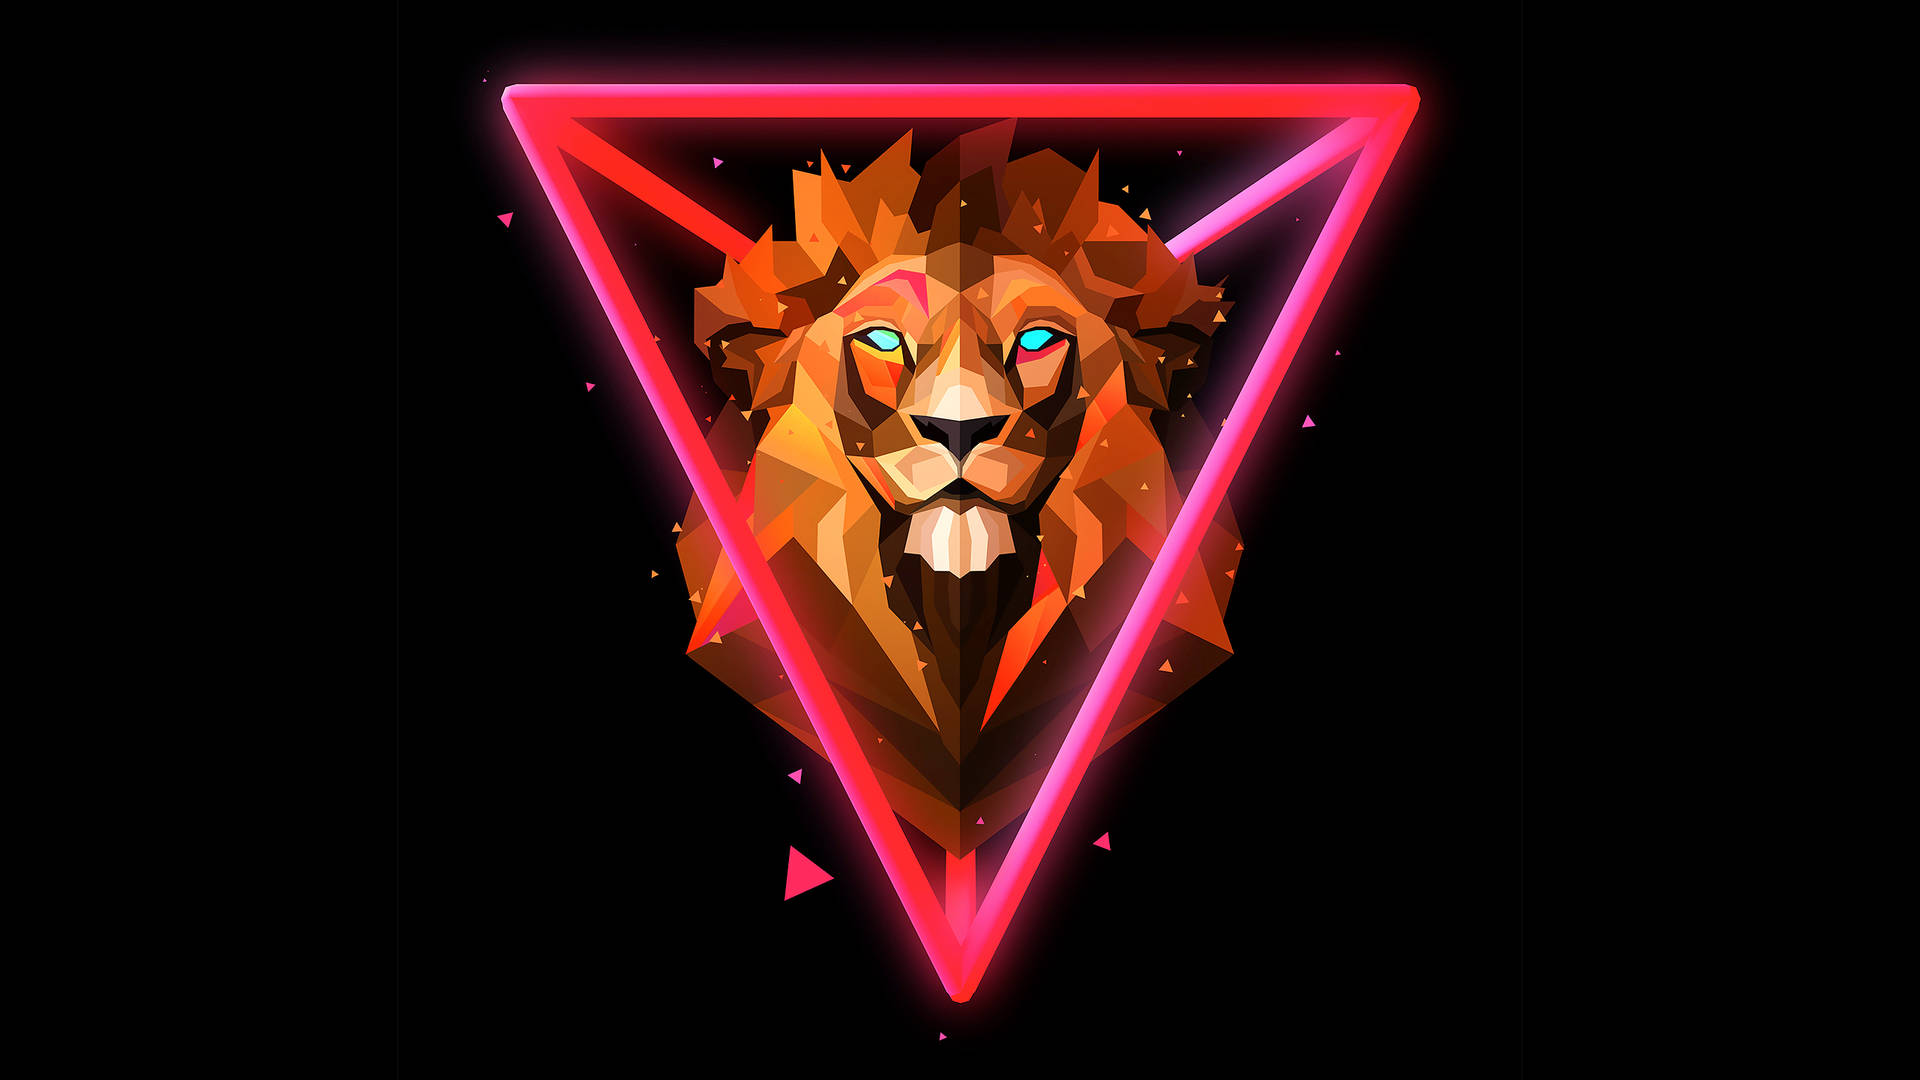 Polygon Art Red Lion